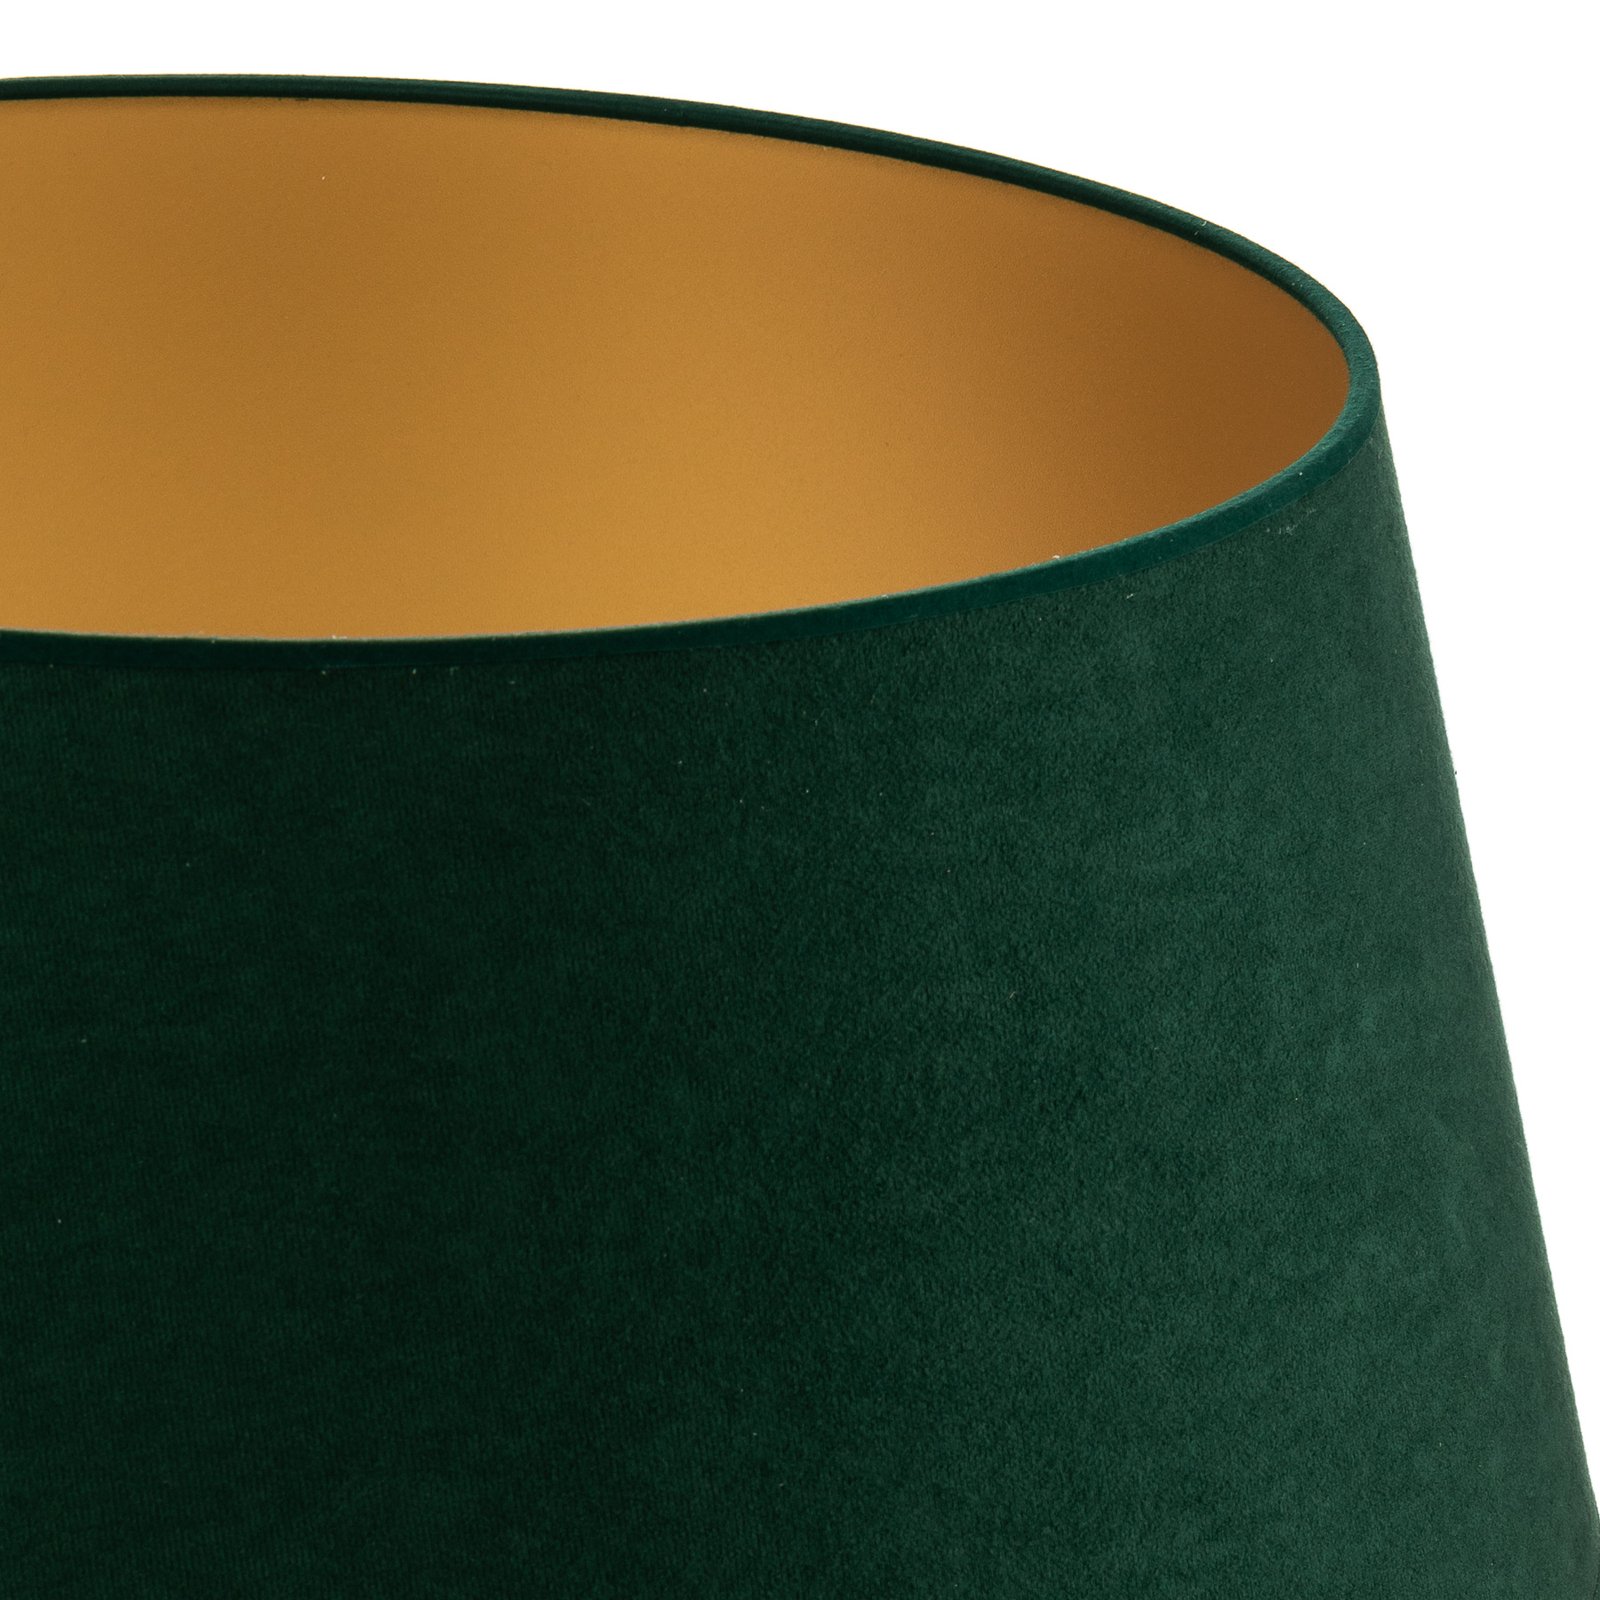 Cone lampshade height 25.5 cm, dark green/gold